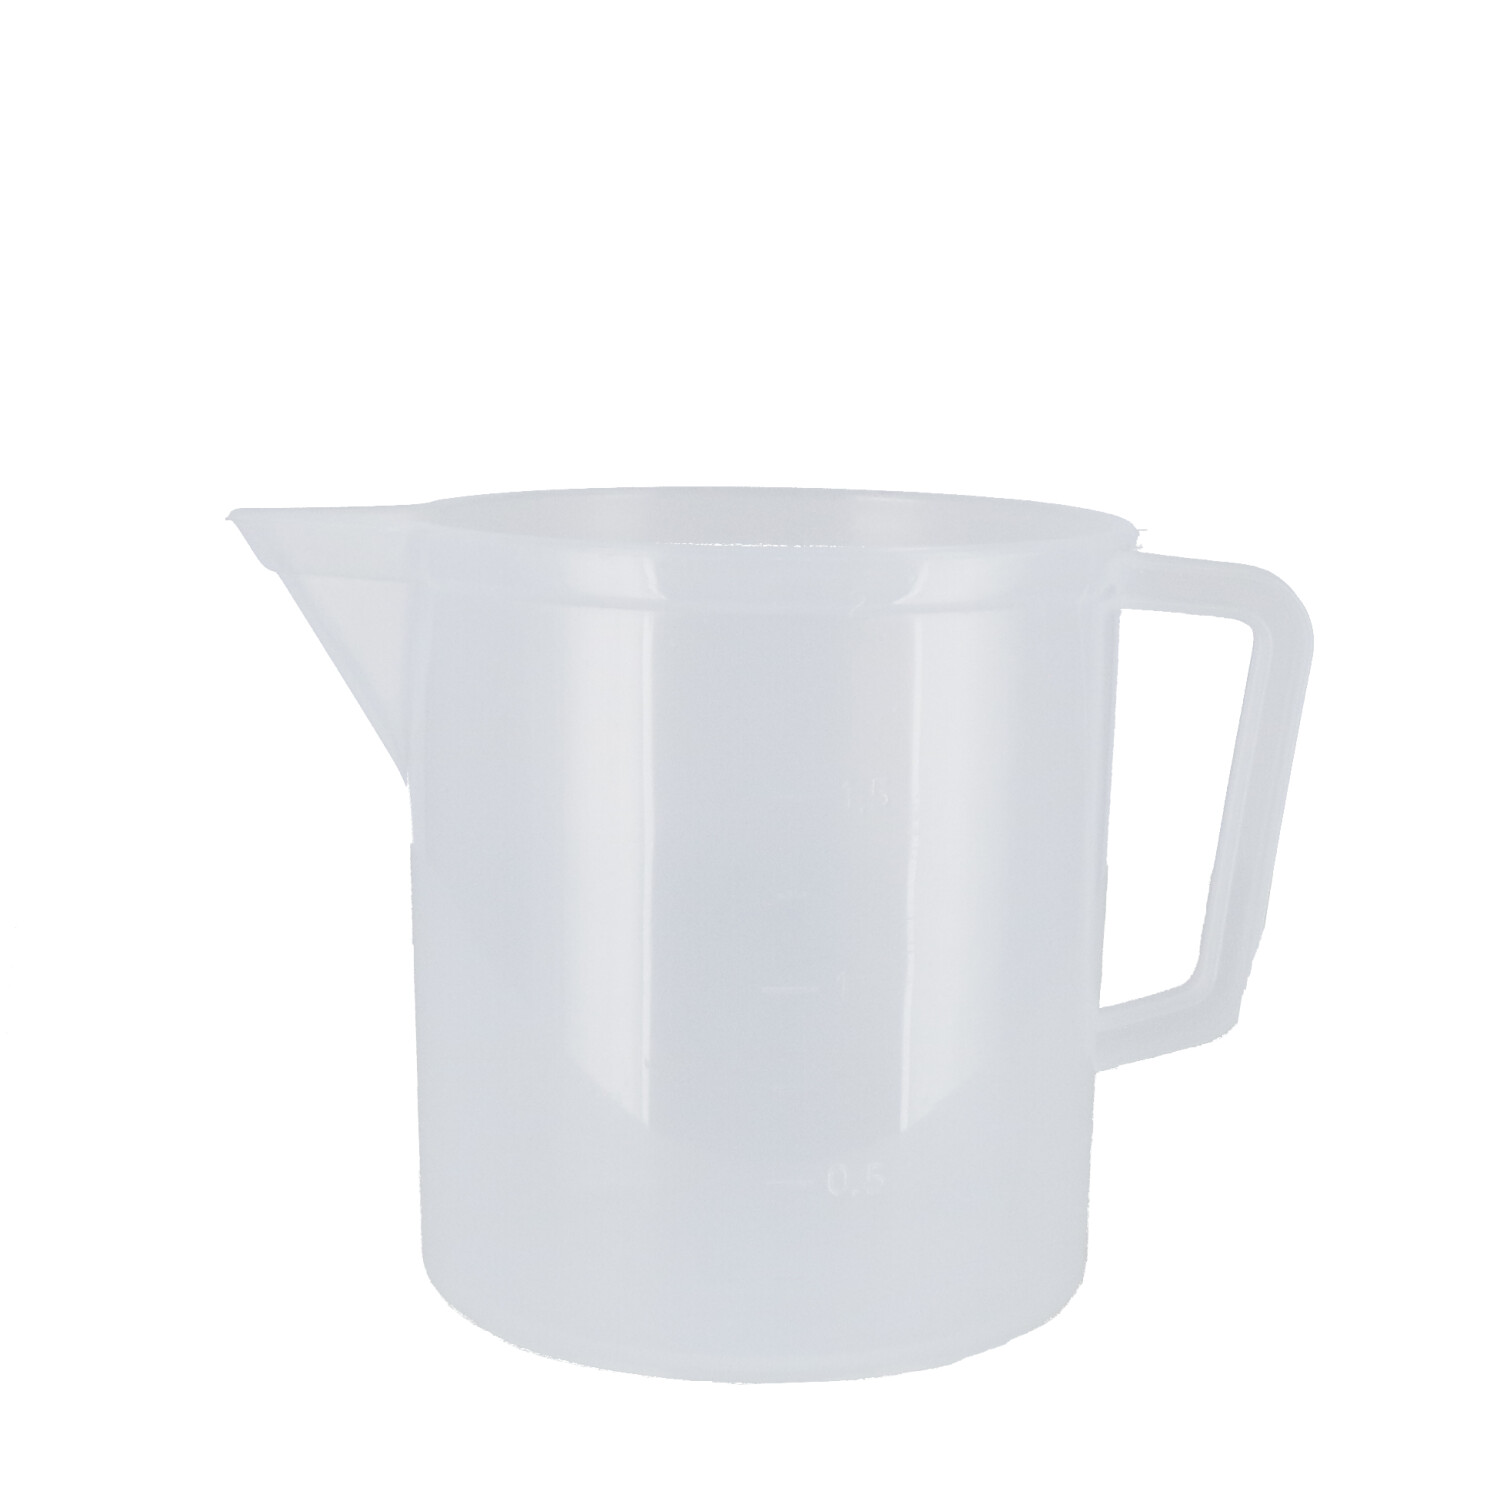 Measuring Cup White Plastic - 2 litre